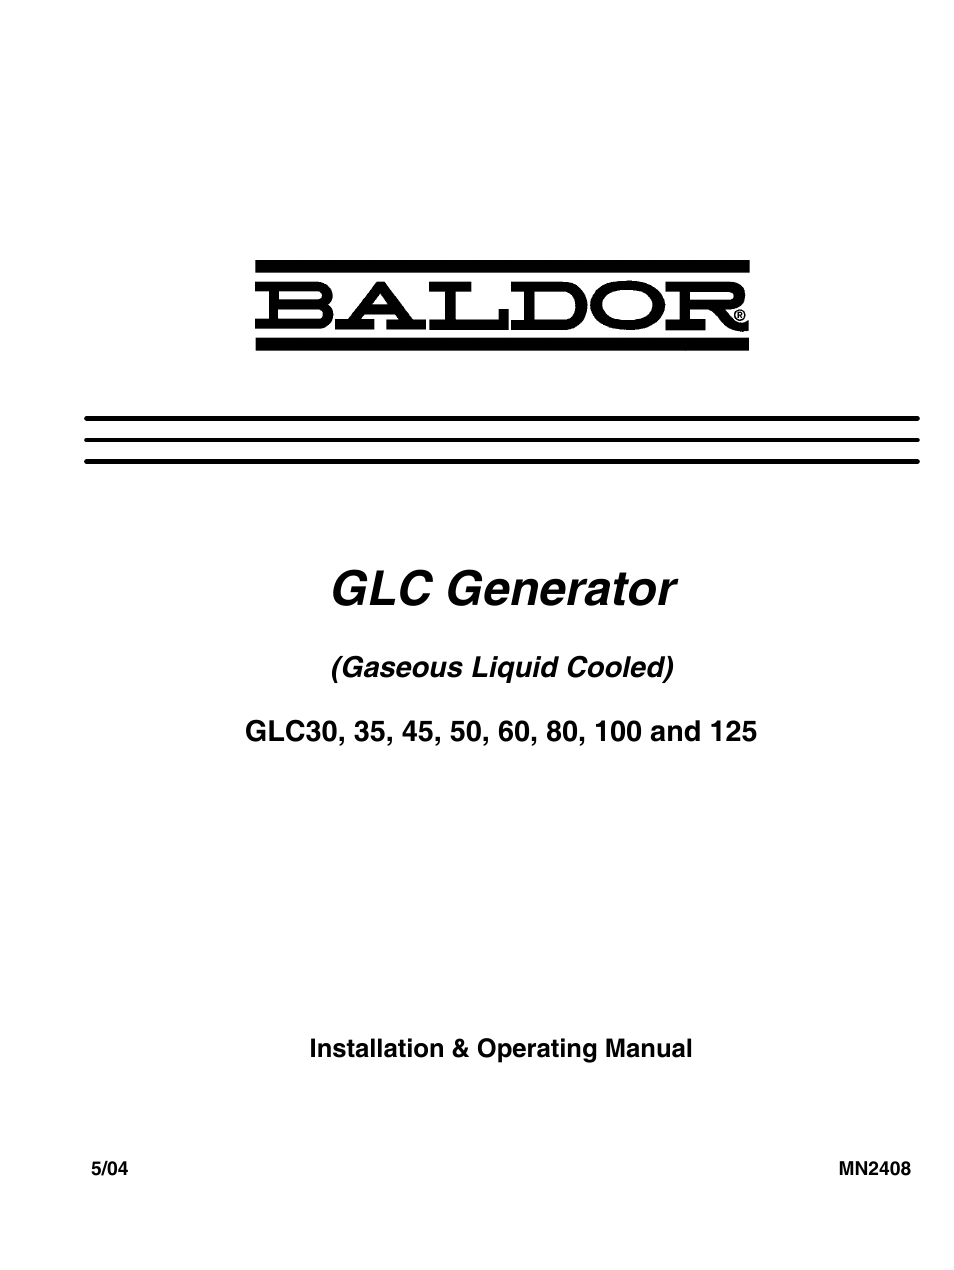 GLC GENERATOR GLC125